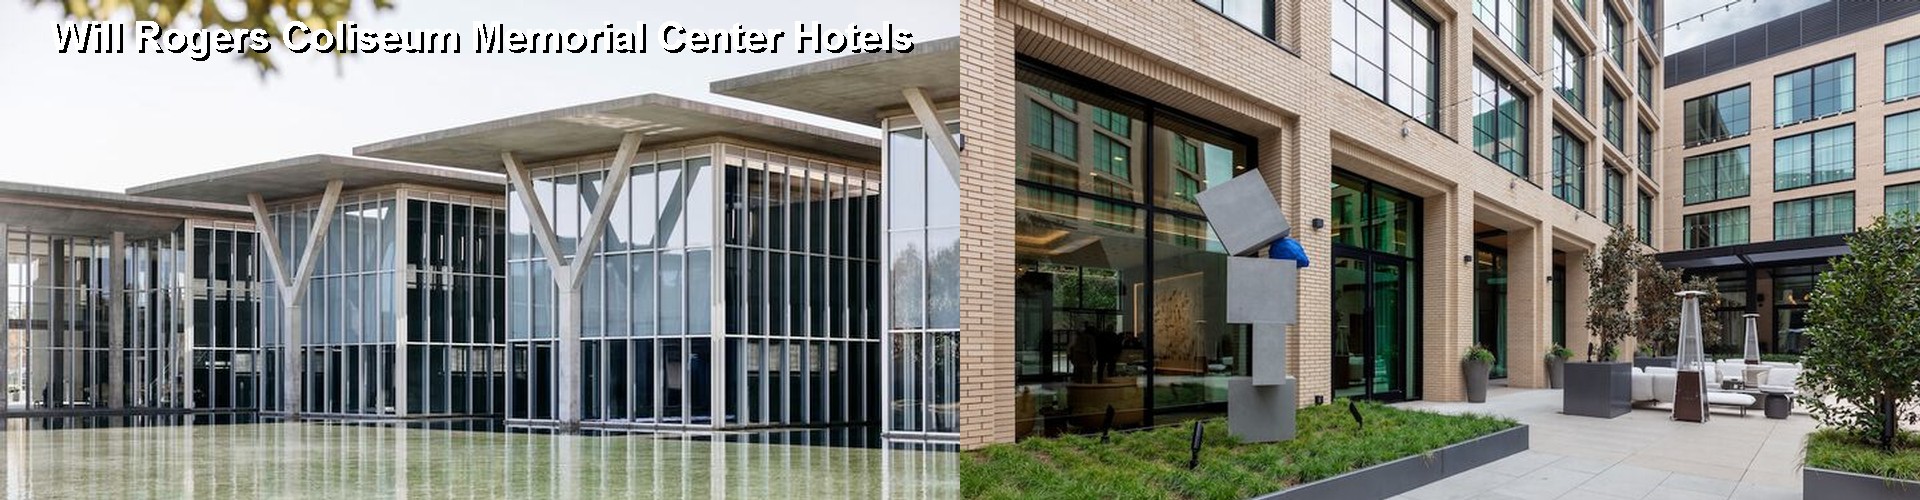 5 Best Hotels near Will Rogers Coliseum Memorial Center